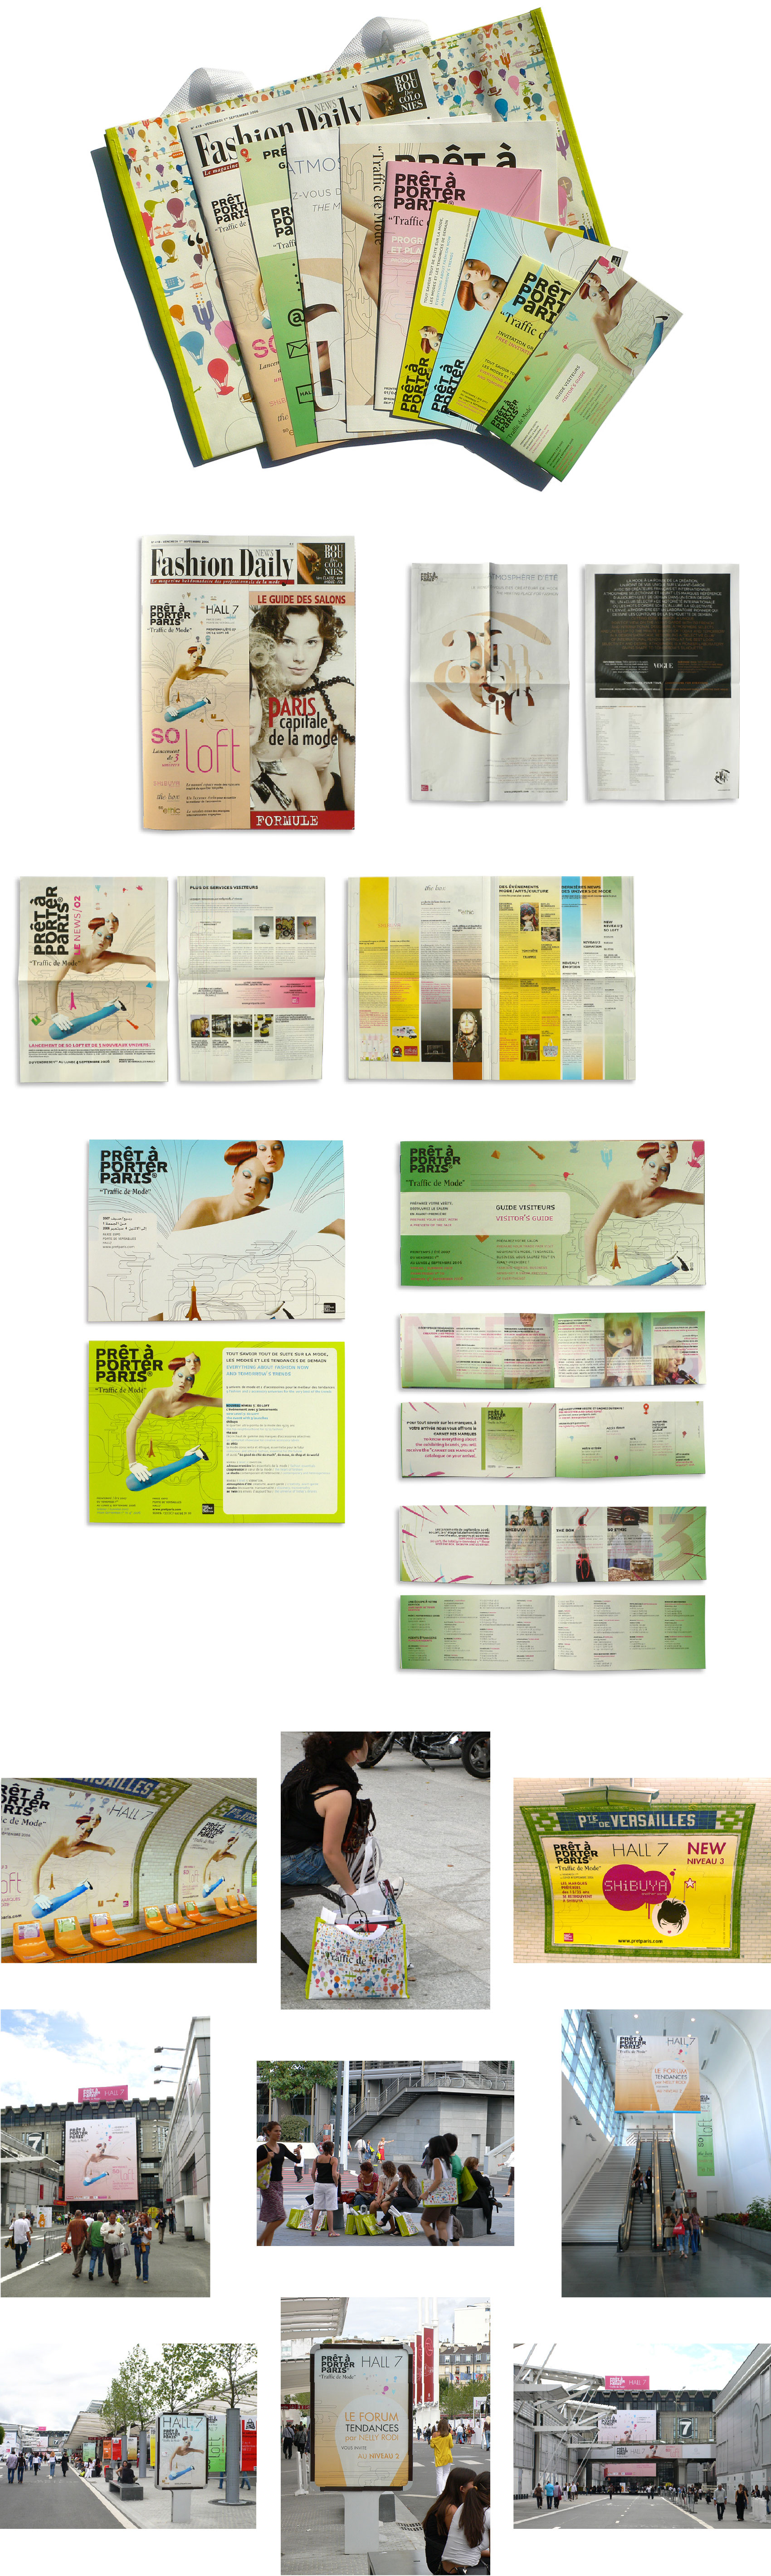 scan écran Atelier Itsuko Hasegawa website